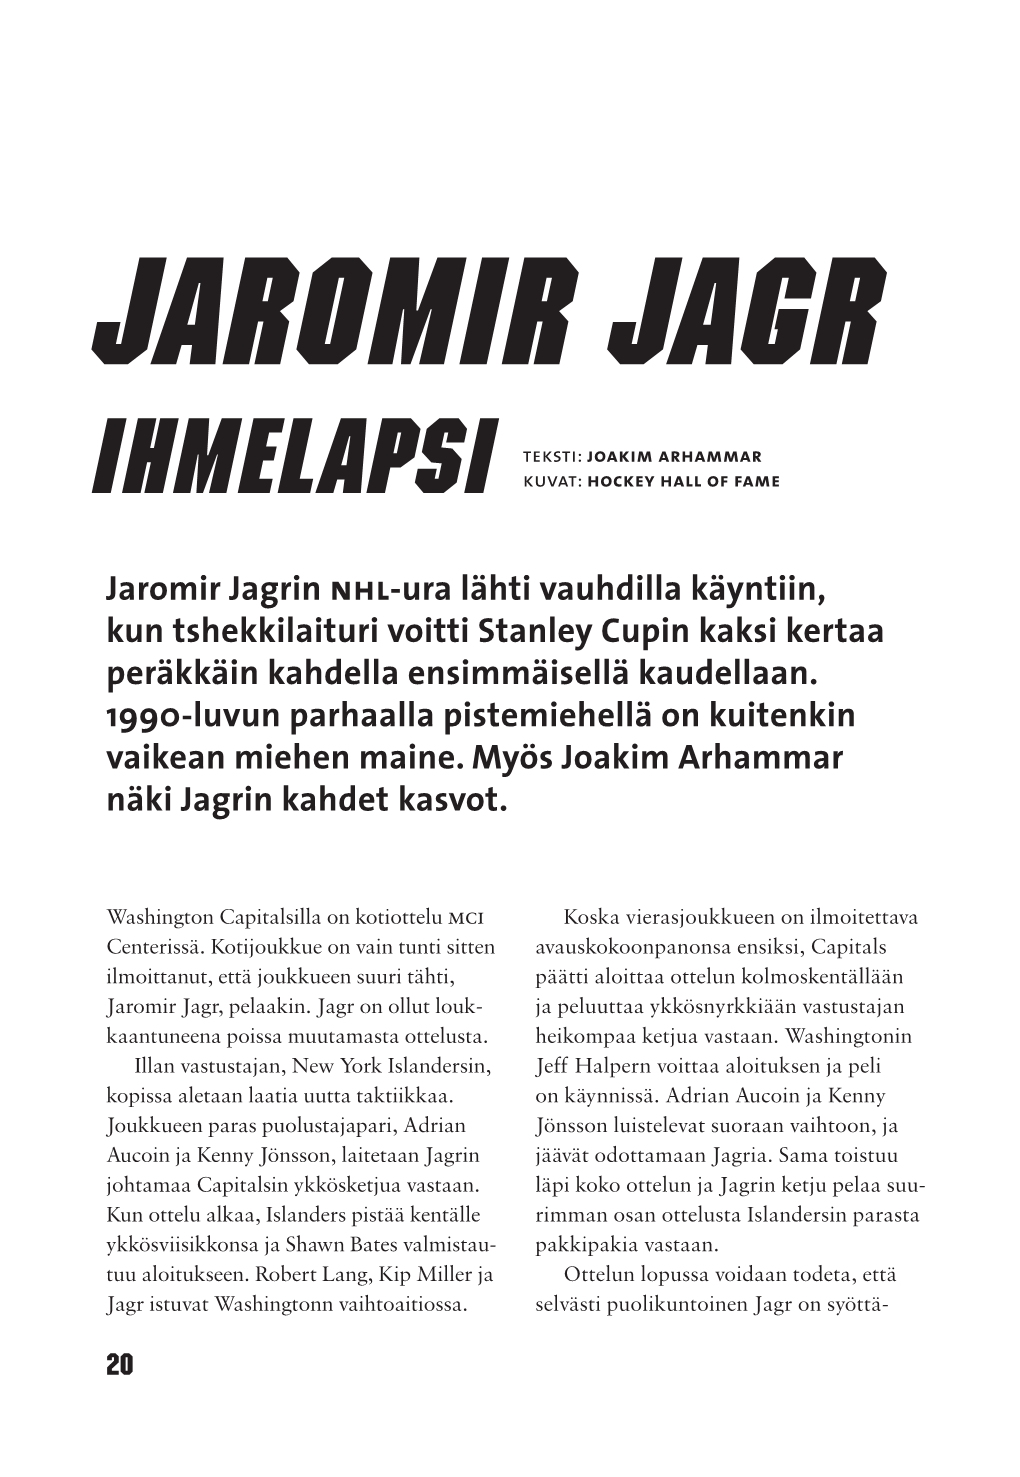 Jaromir Jagr